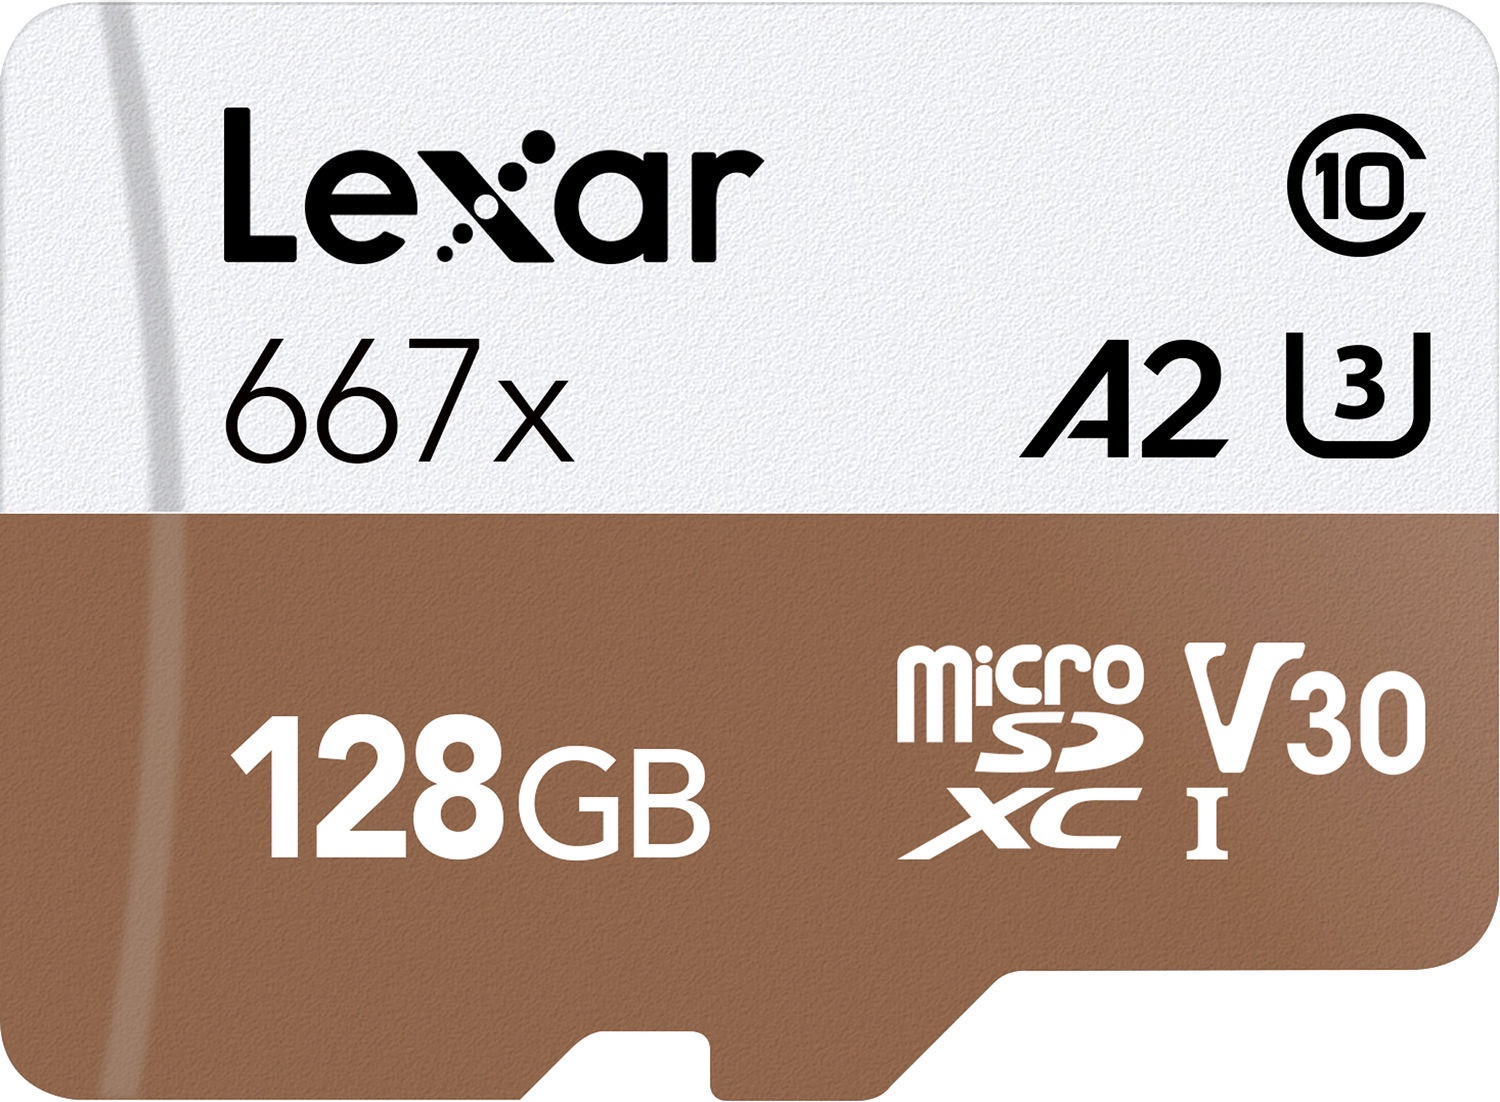 The microSD card